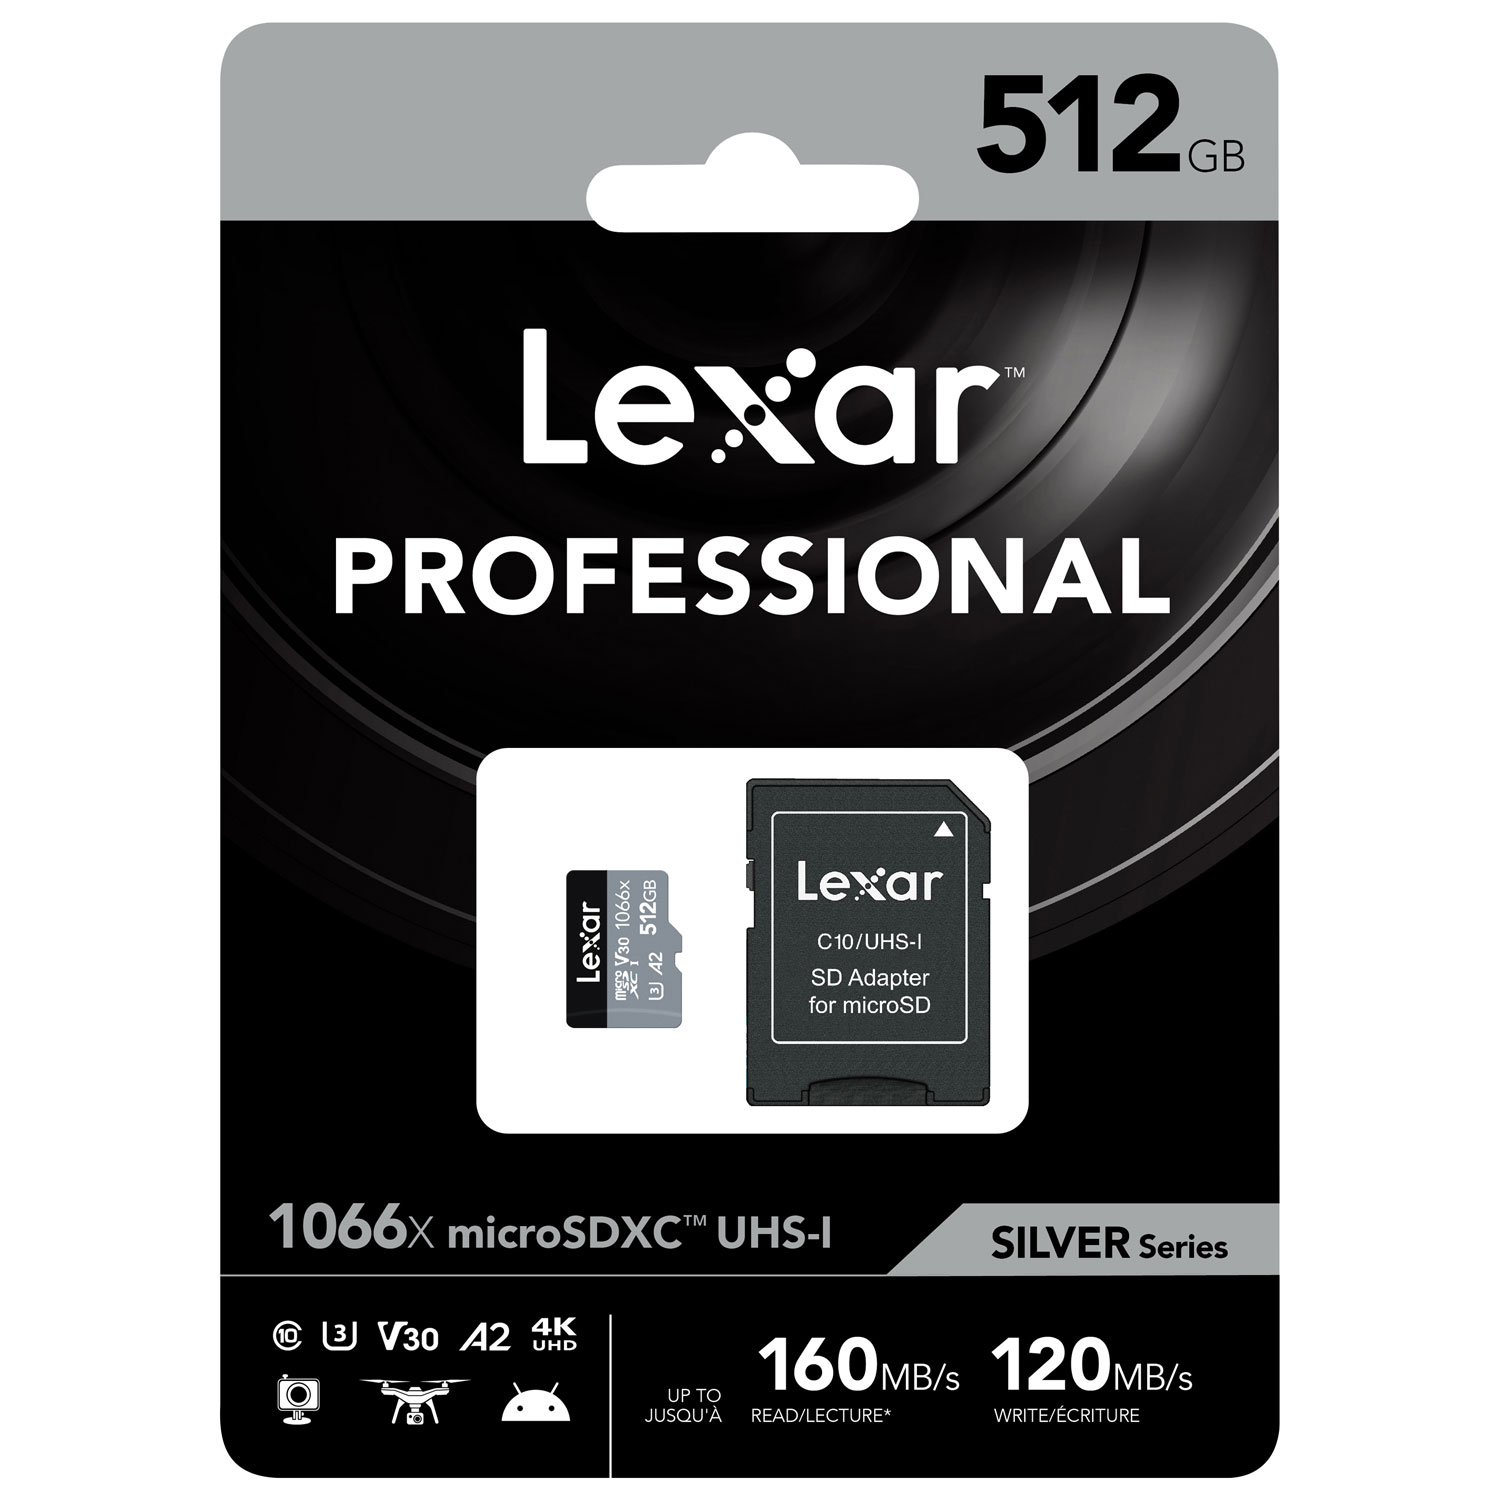 Lexar Professional 1066x 512GB 160MB/s microSDXC UHS-I Memory Card